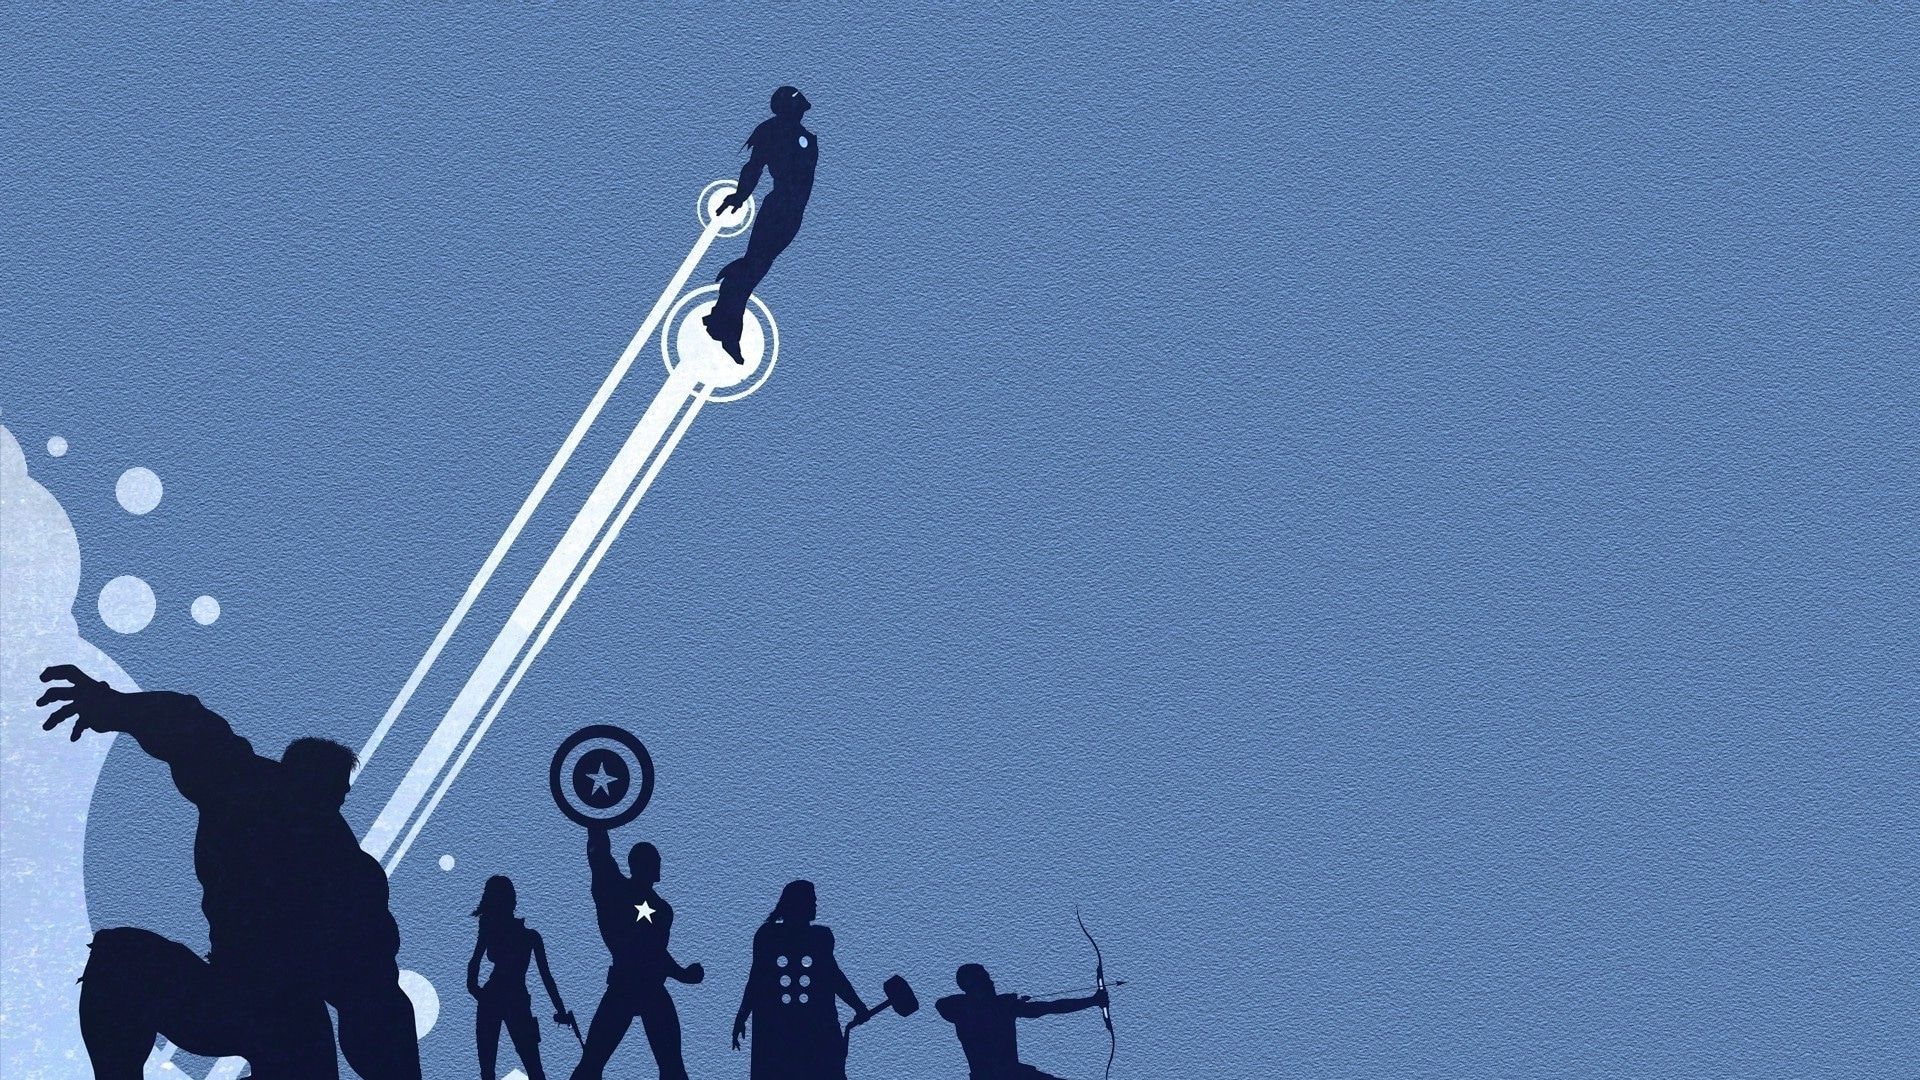 Wallpaper / The Avengers, Iron Man, Hulk, Thor, Hawkeye, Captain America, Black Widow free download